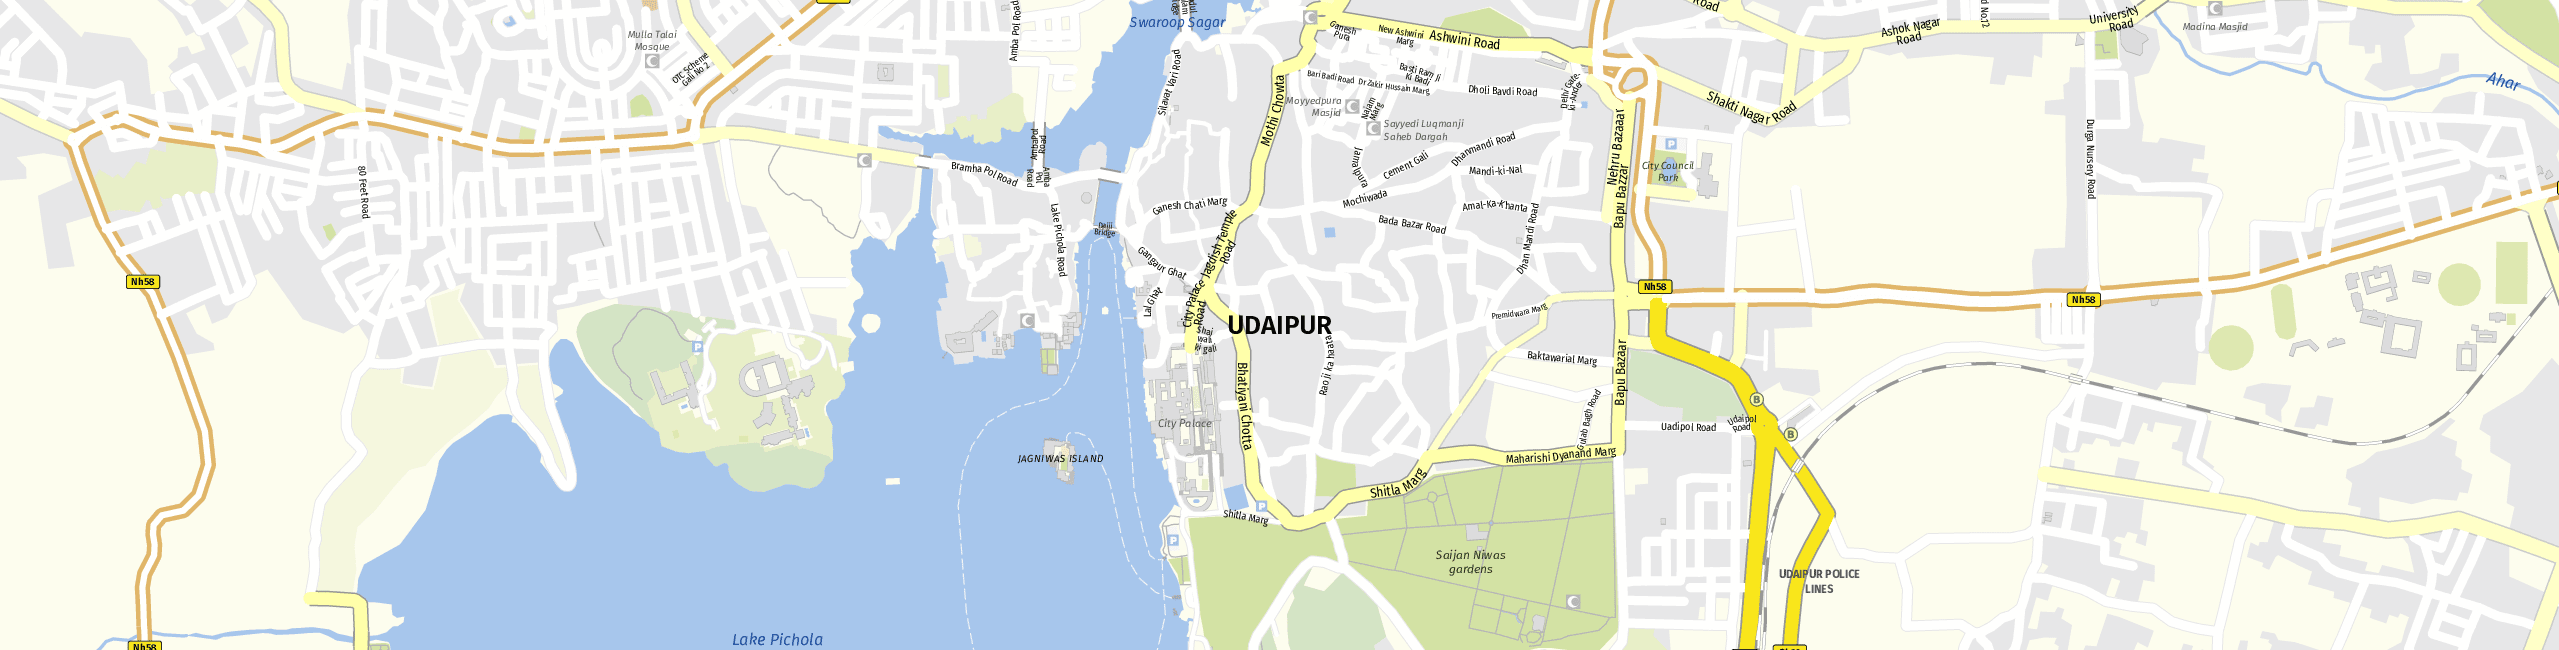 Stadtplan Udaipur zum Downloaden.